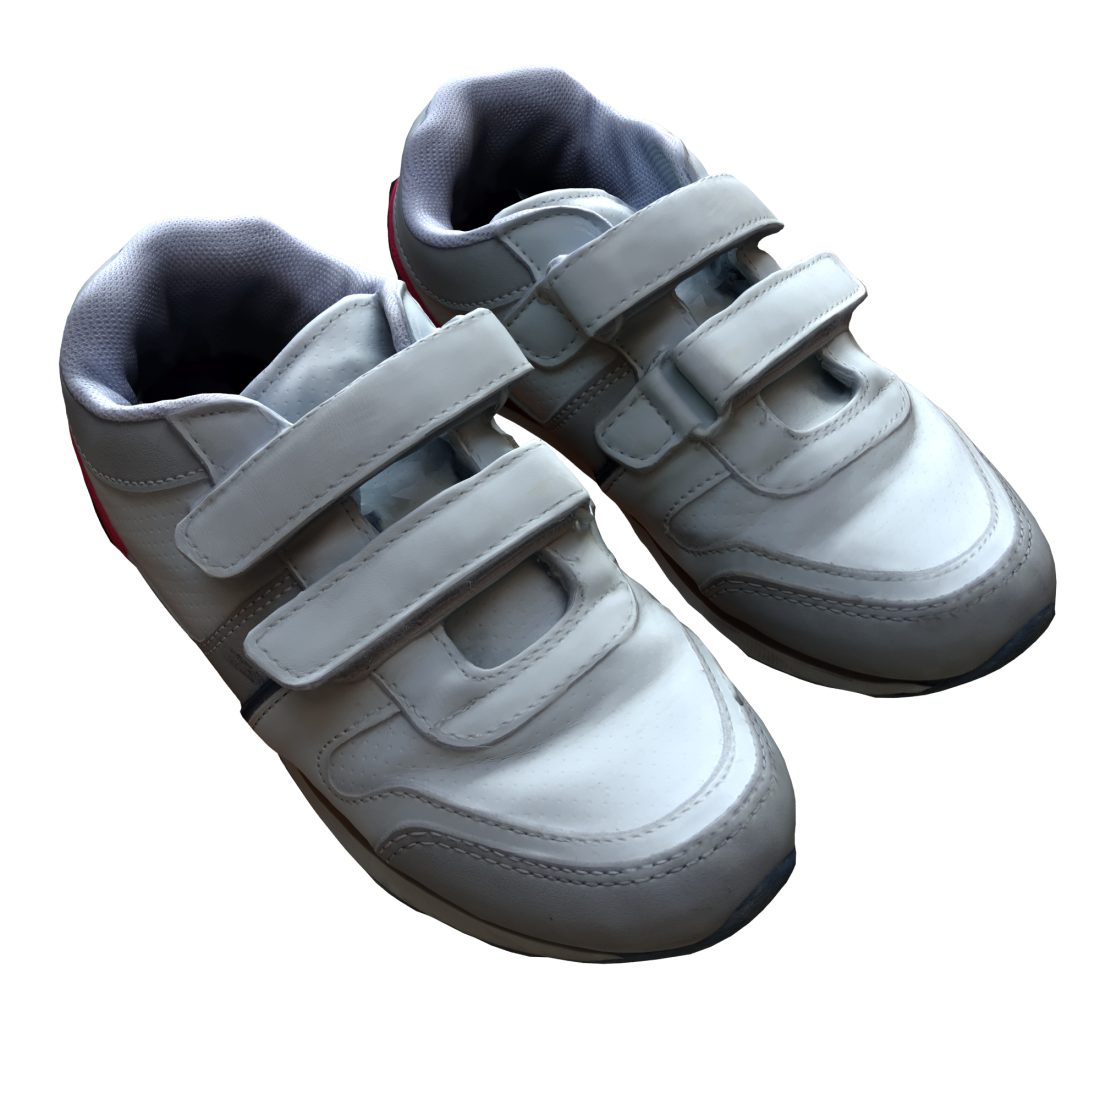 Shoes 21 - 3D Model for Corona